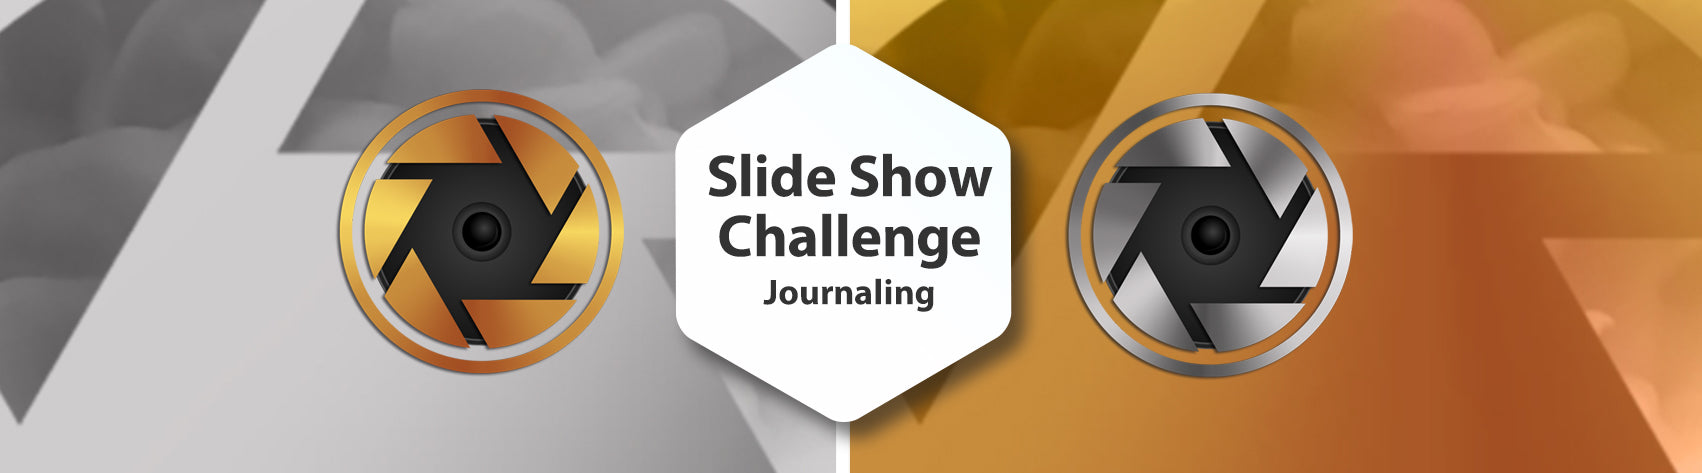 Slide Show Challenge - Journaling